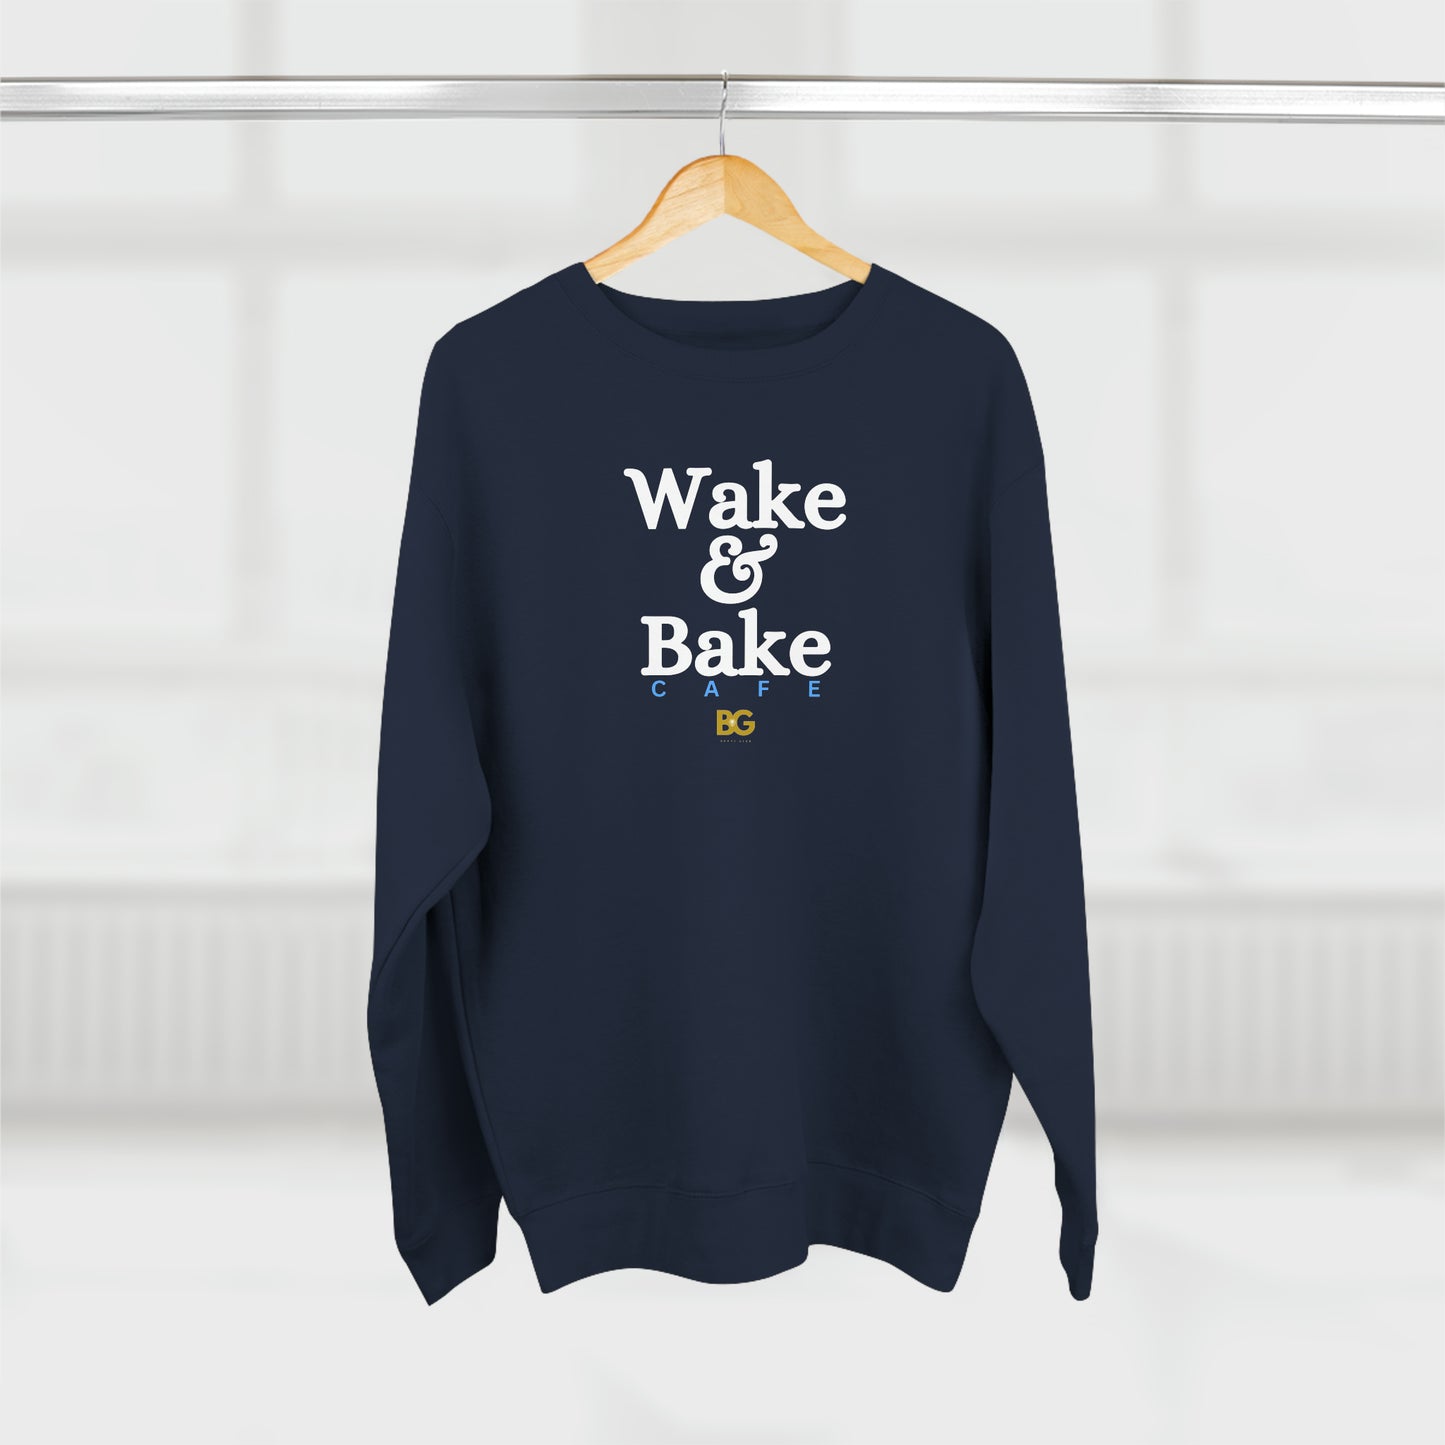 BG "Wake & Bake Cafe" Premium Crewneck Sweatshirt